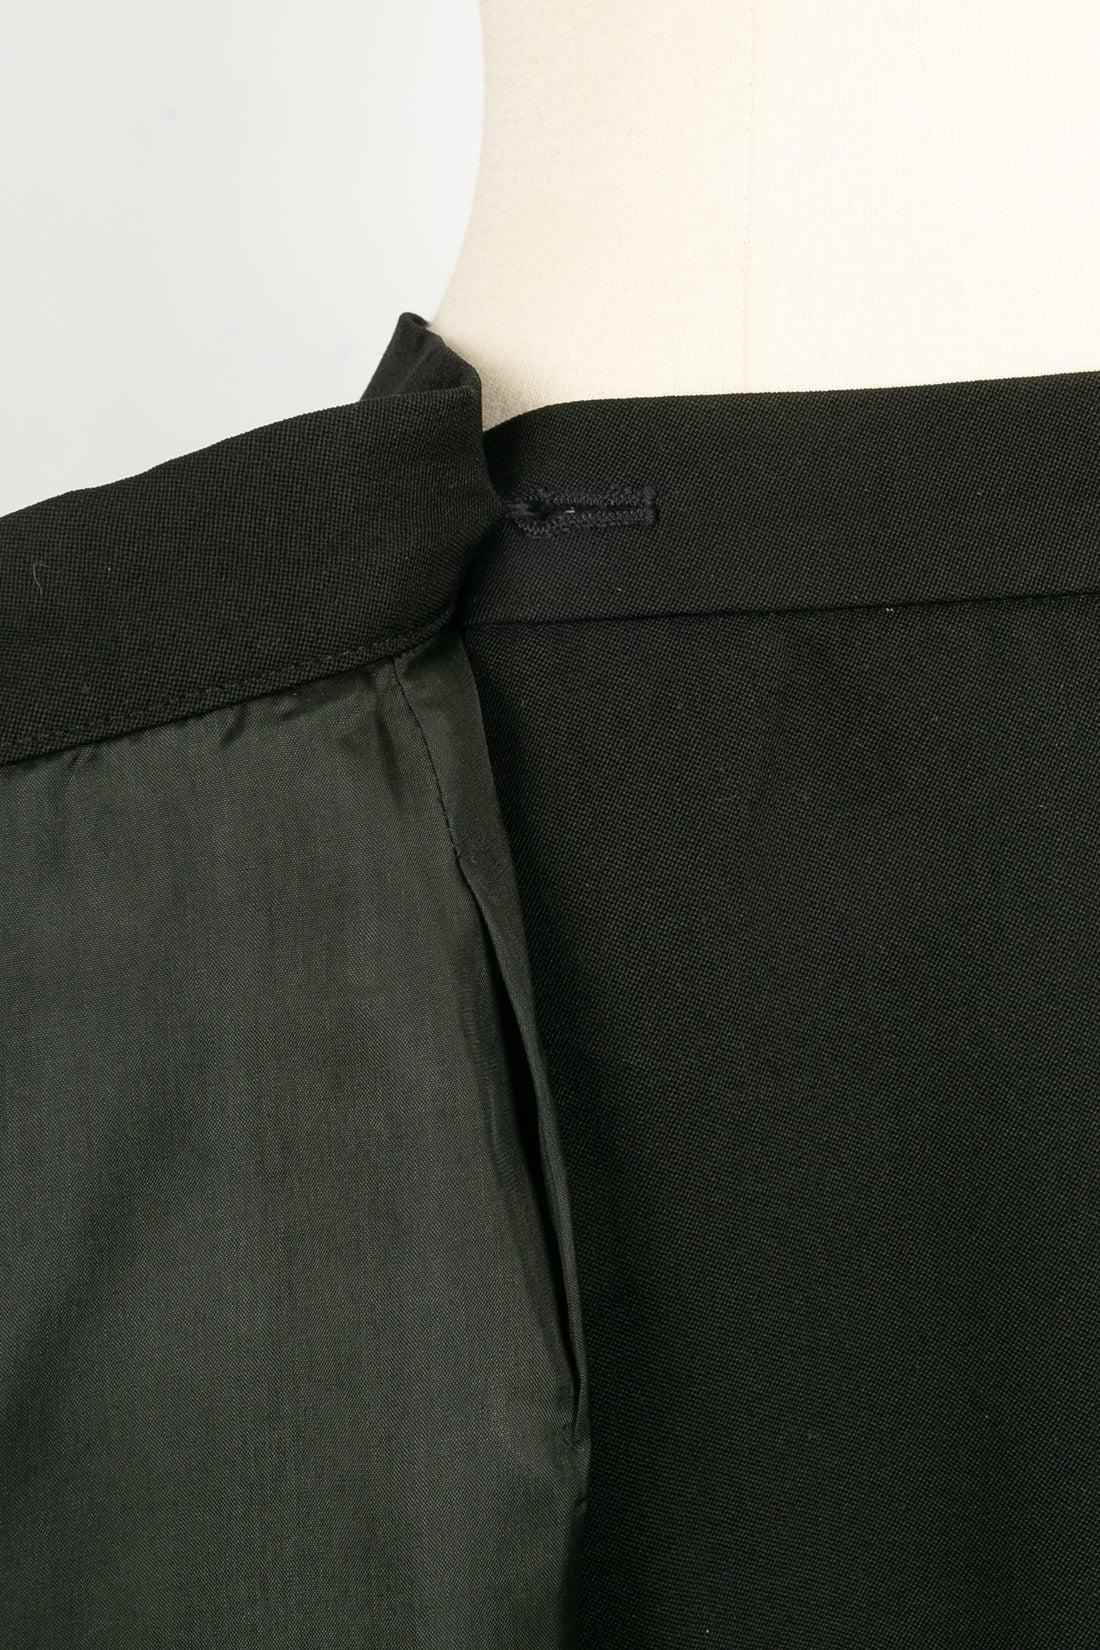 Yves Saint Laurent Black Skirt Suit For Sale 11